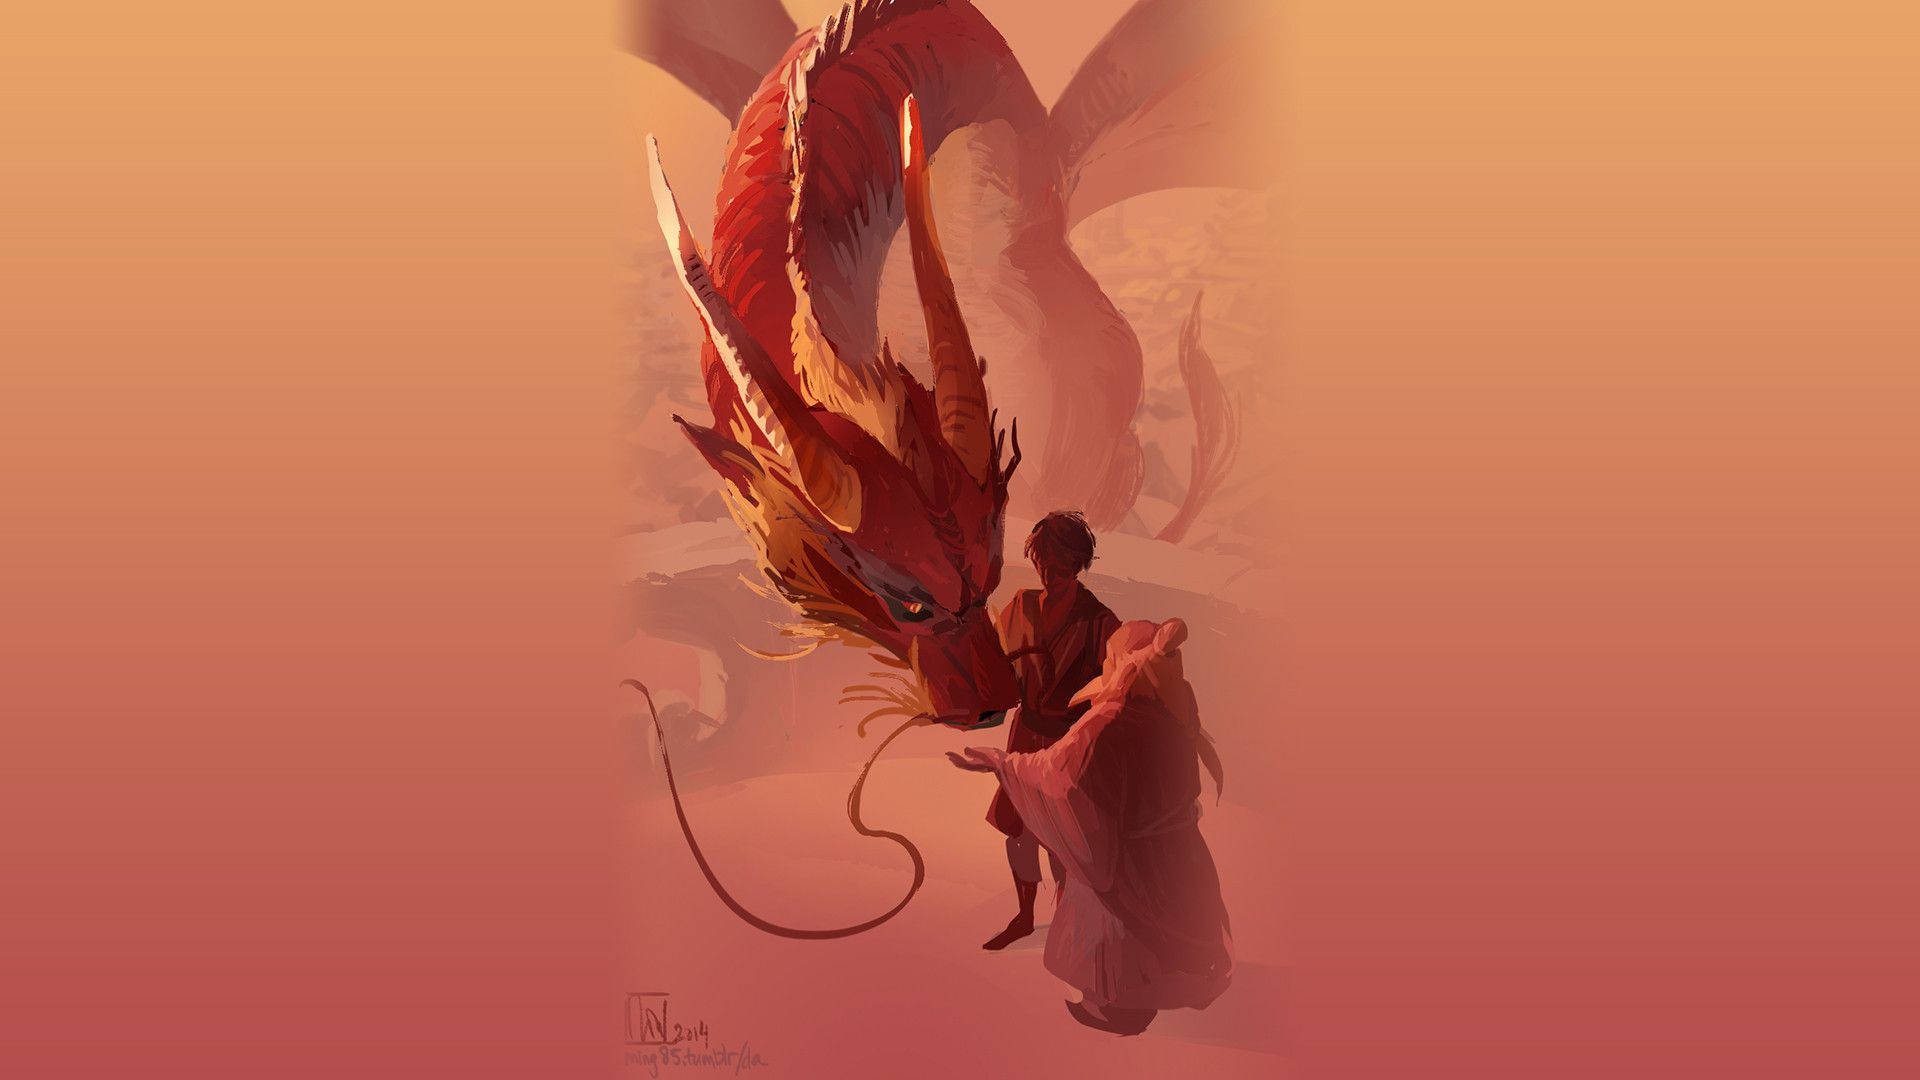 Download Avatar The Last Airbender Zuko, Iroh And Dragon Wallpaper